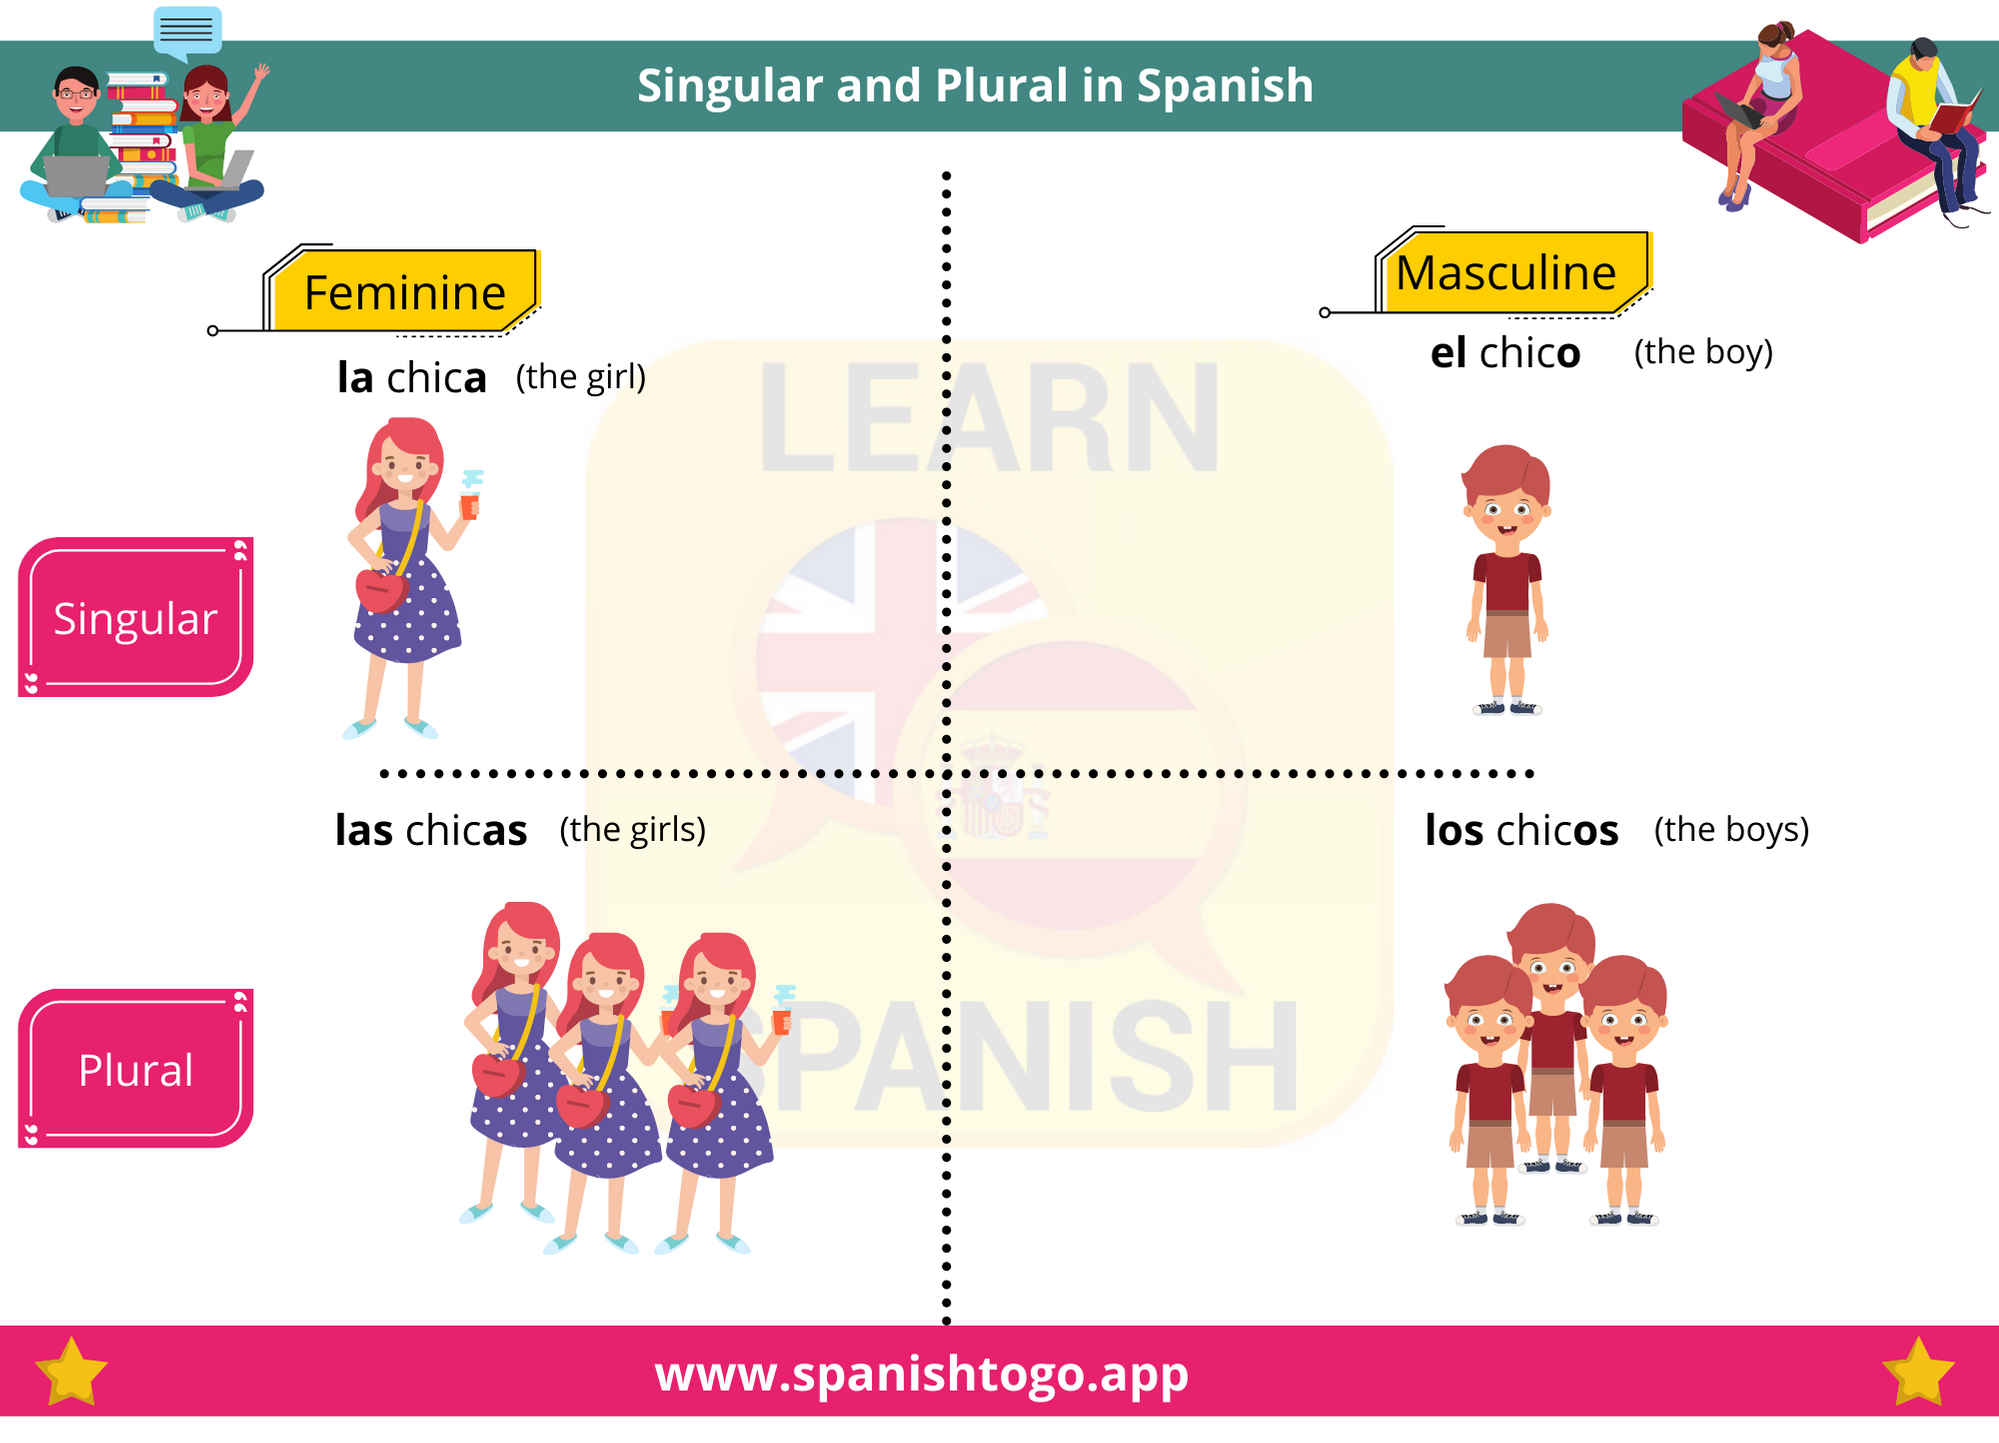 english-to-spanish-singular-and-plural-nouns